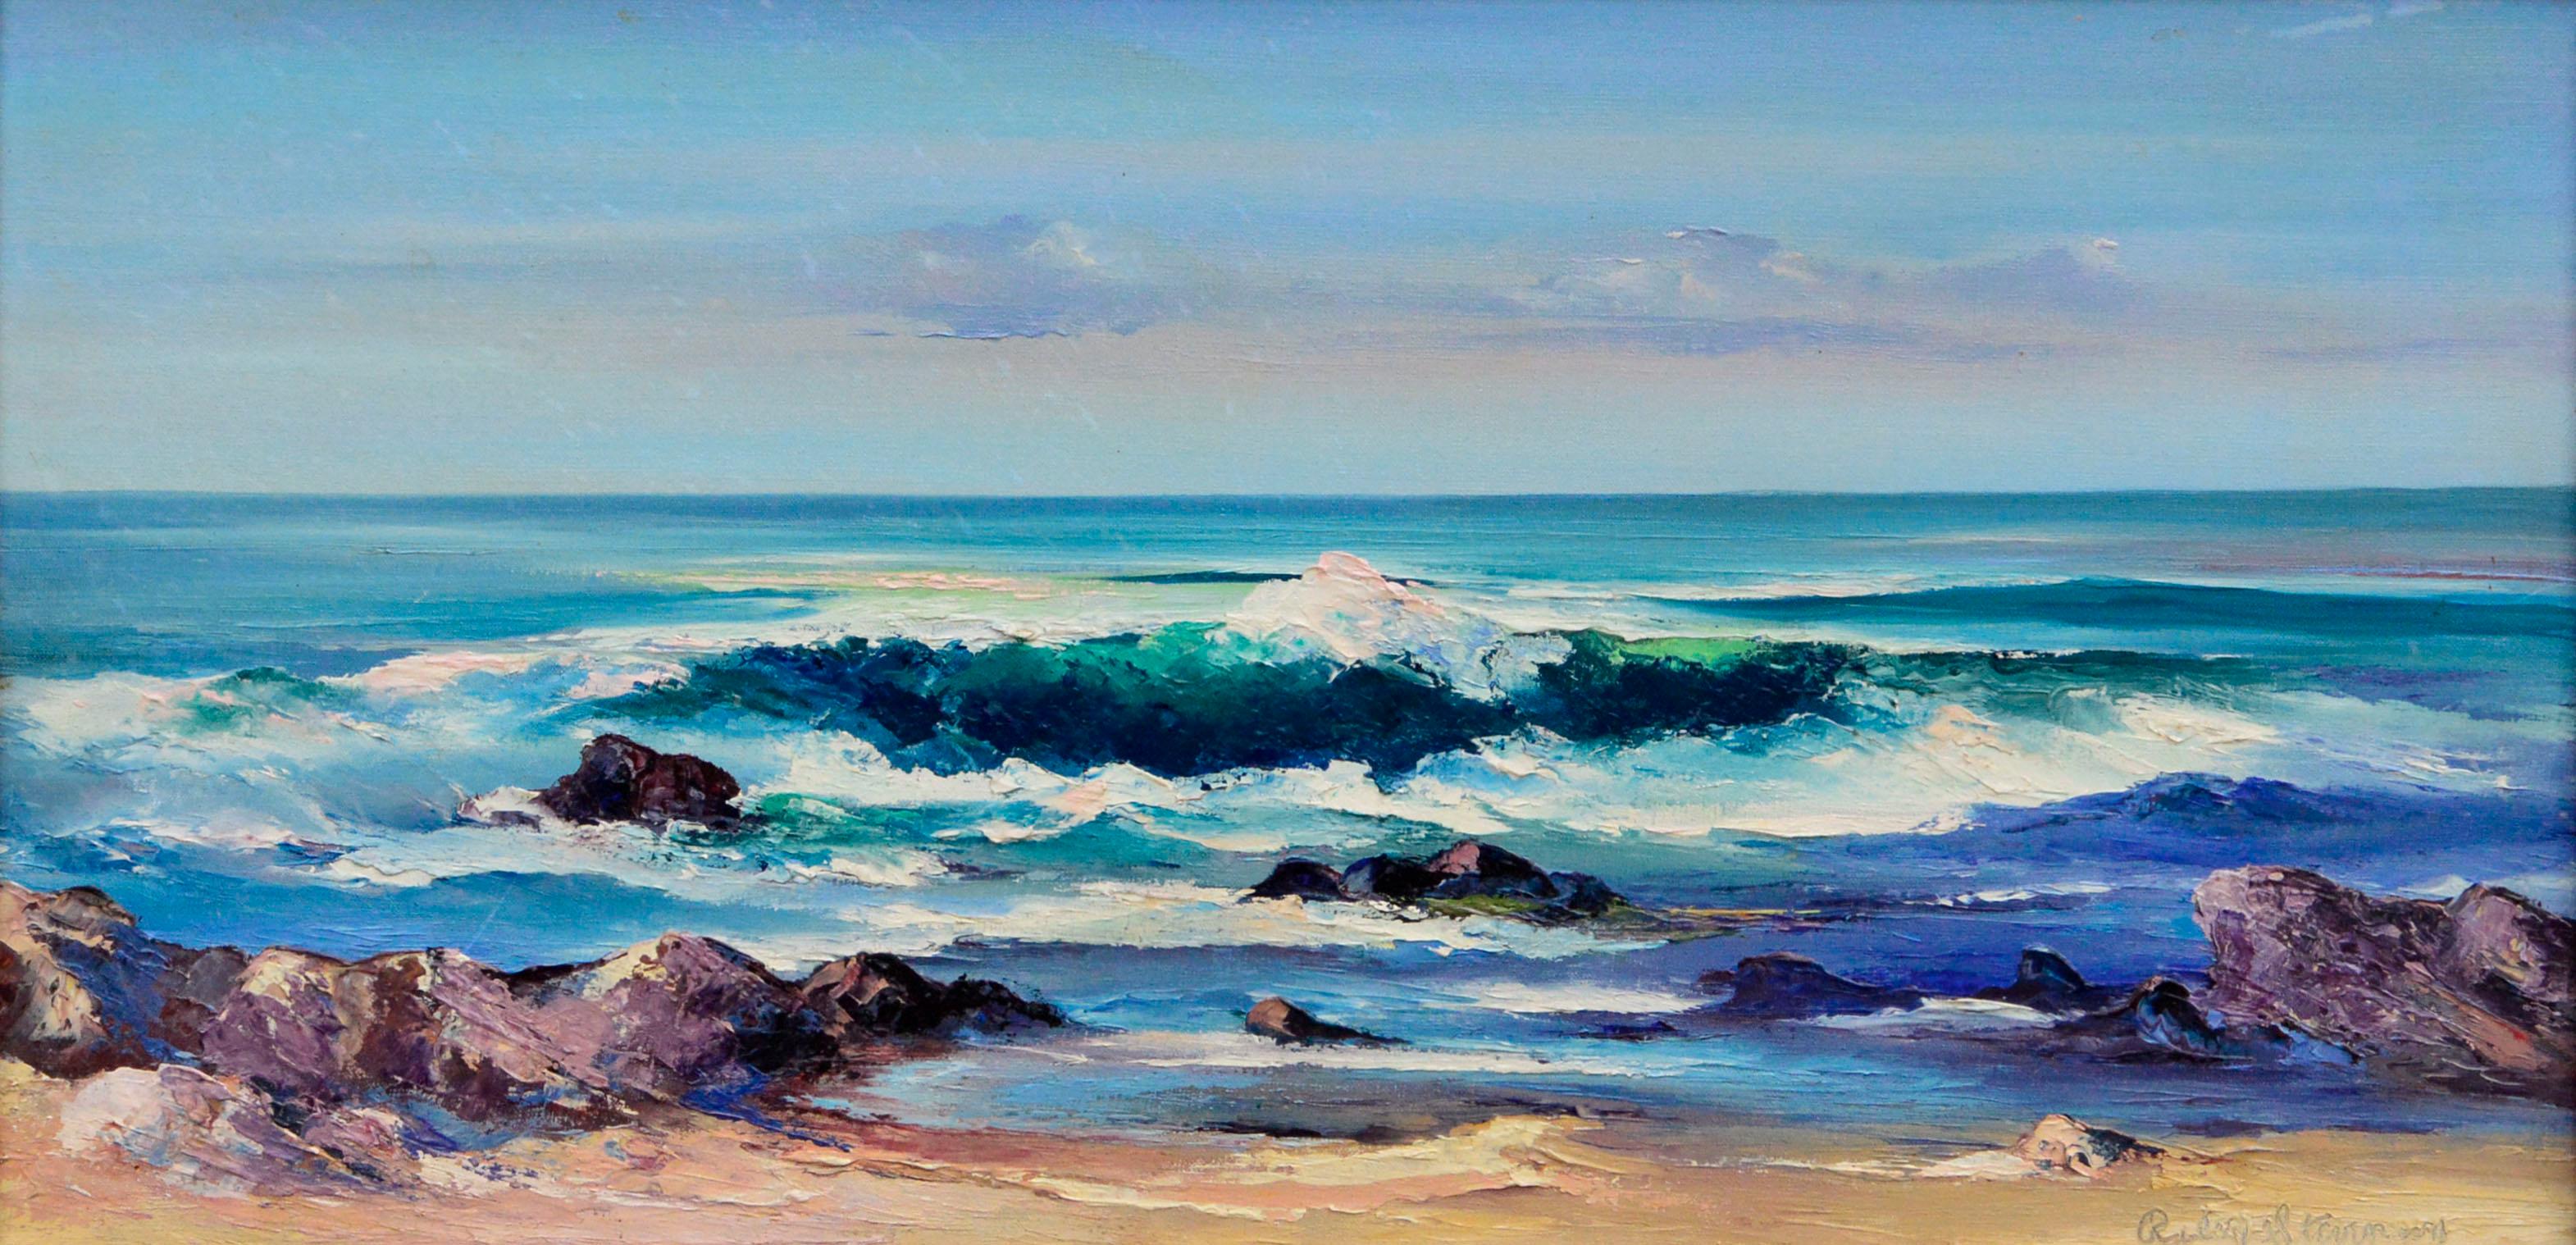 Mid Century Crashing Wave - Carmel Beach Seascape  - Painting by James Riley Stevenson